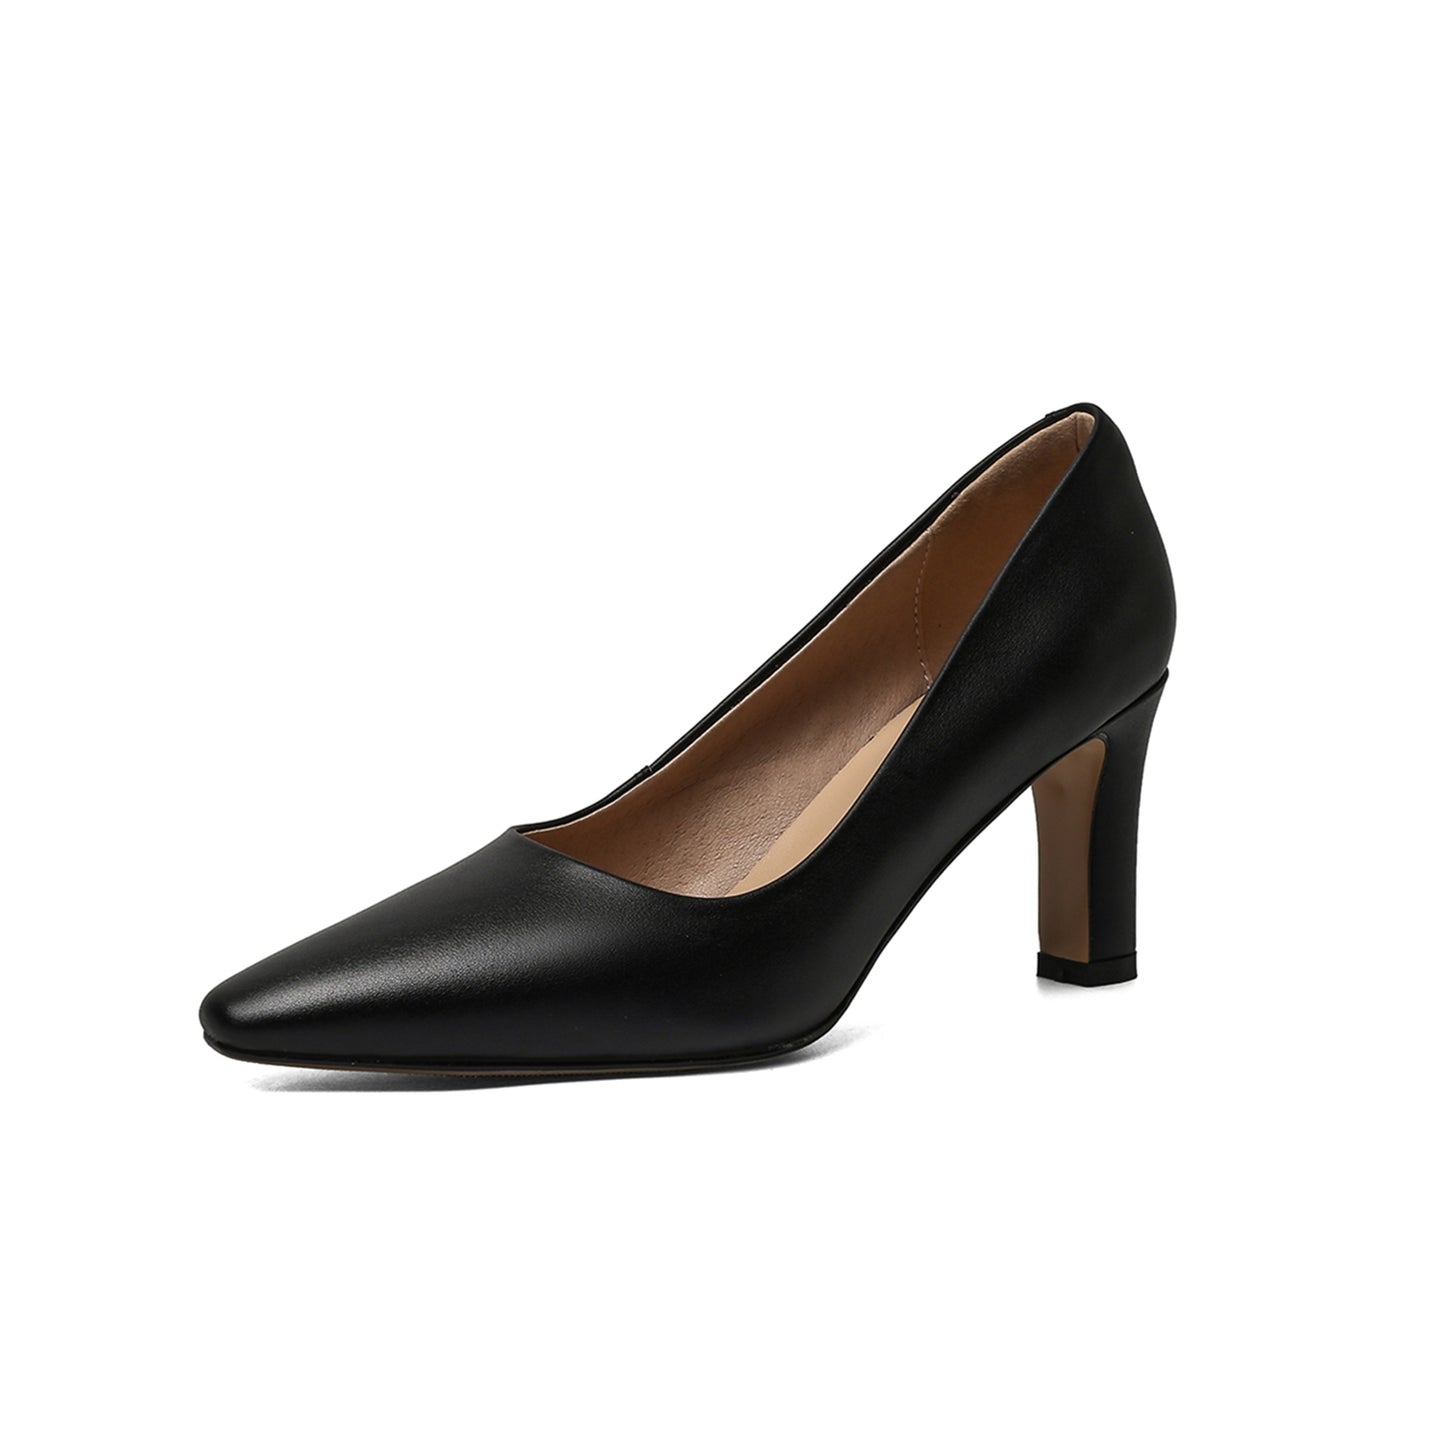 TinaCus Women's Genuine Leather Handmade High Heel Square Toe Easy Slip On Pump Shoes